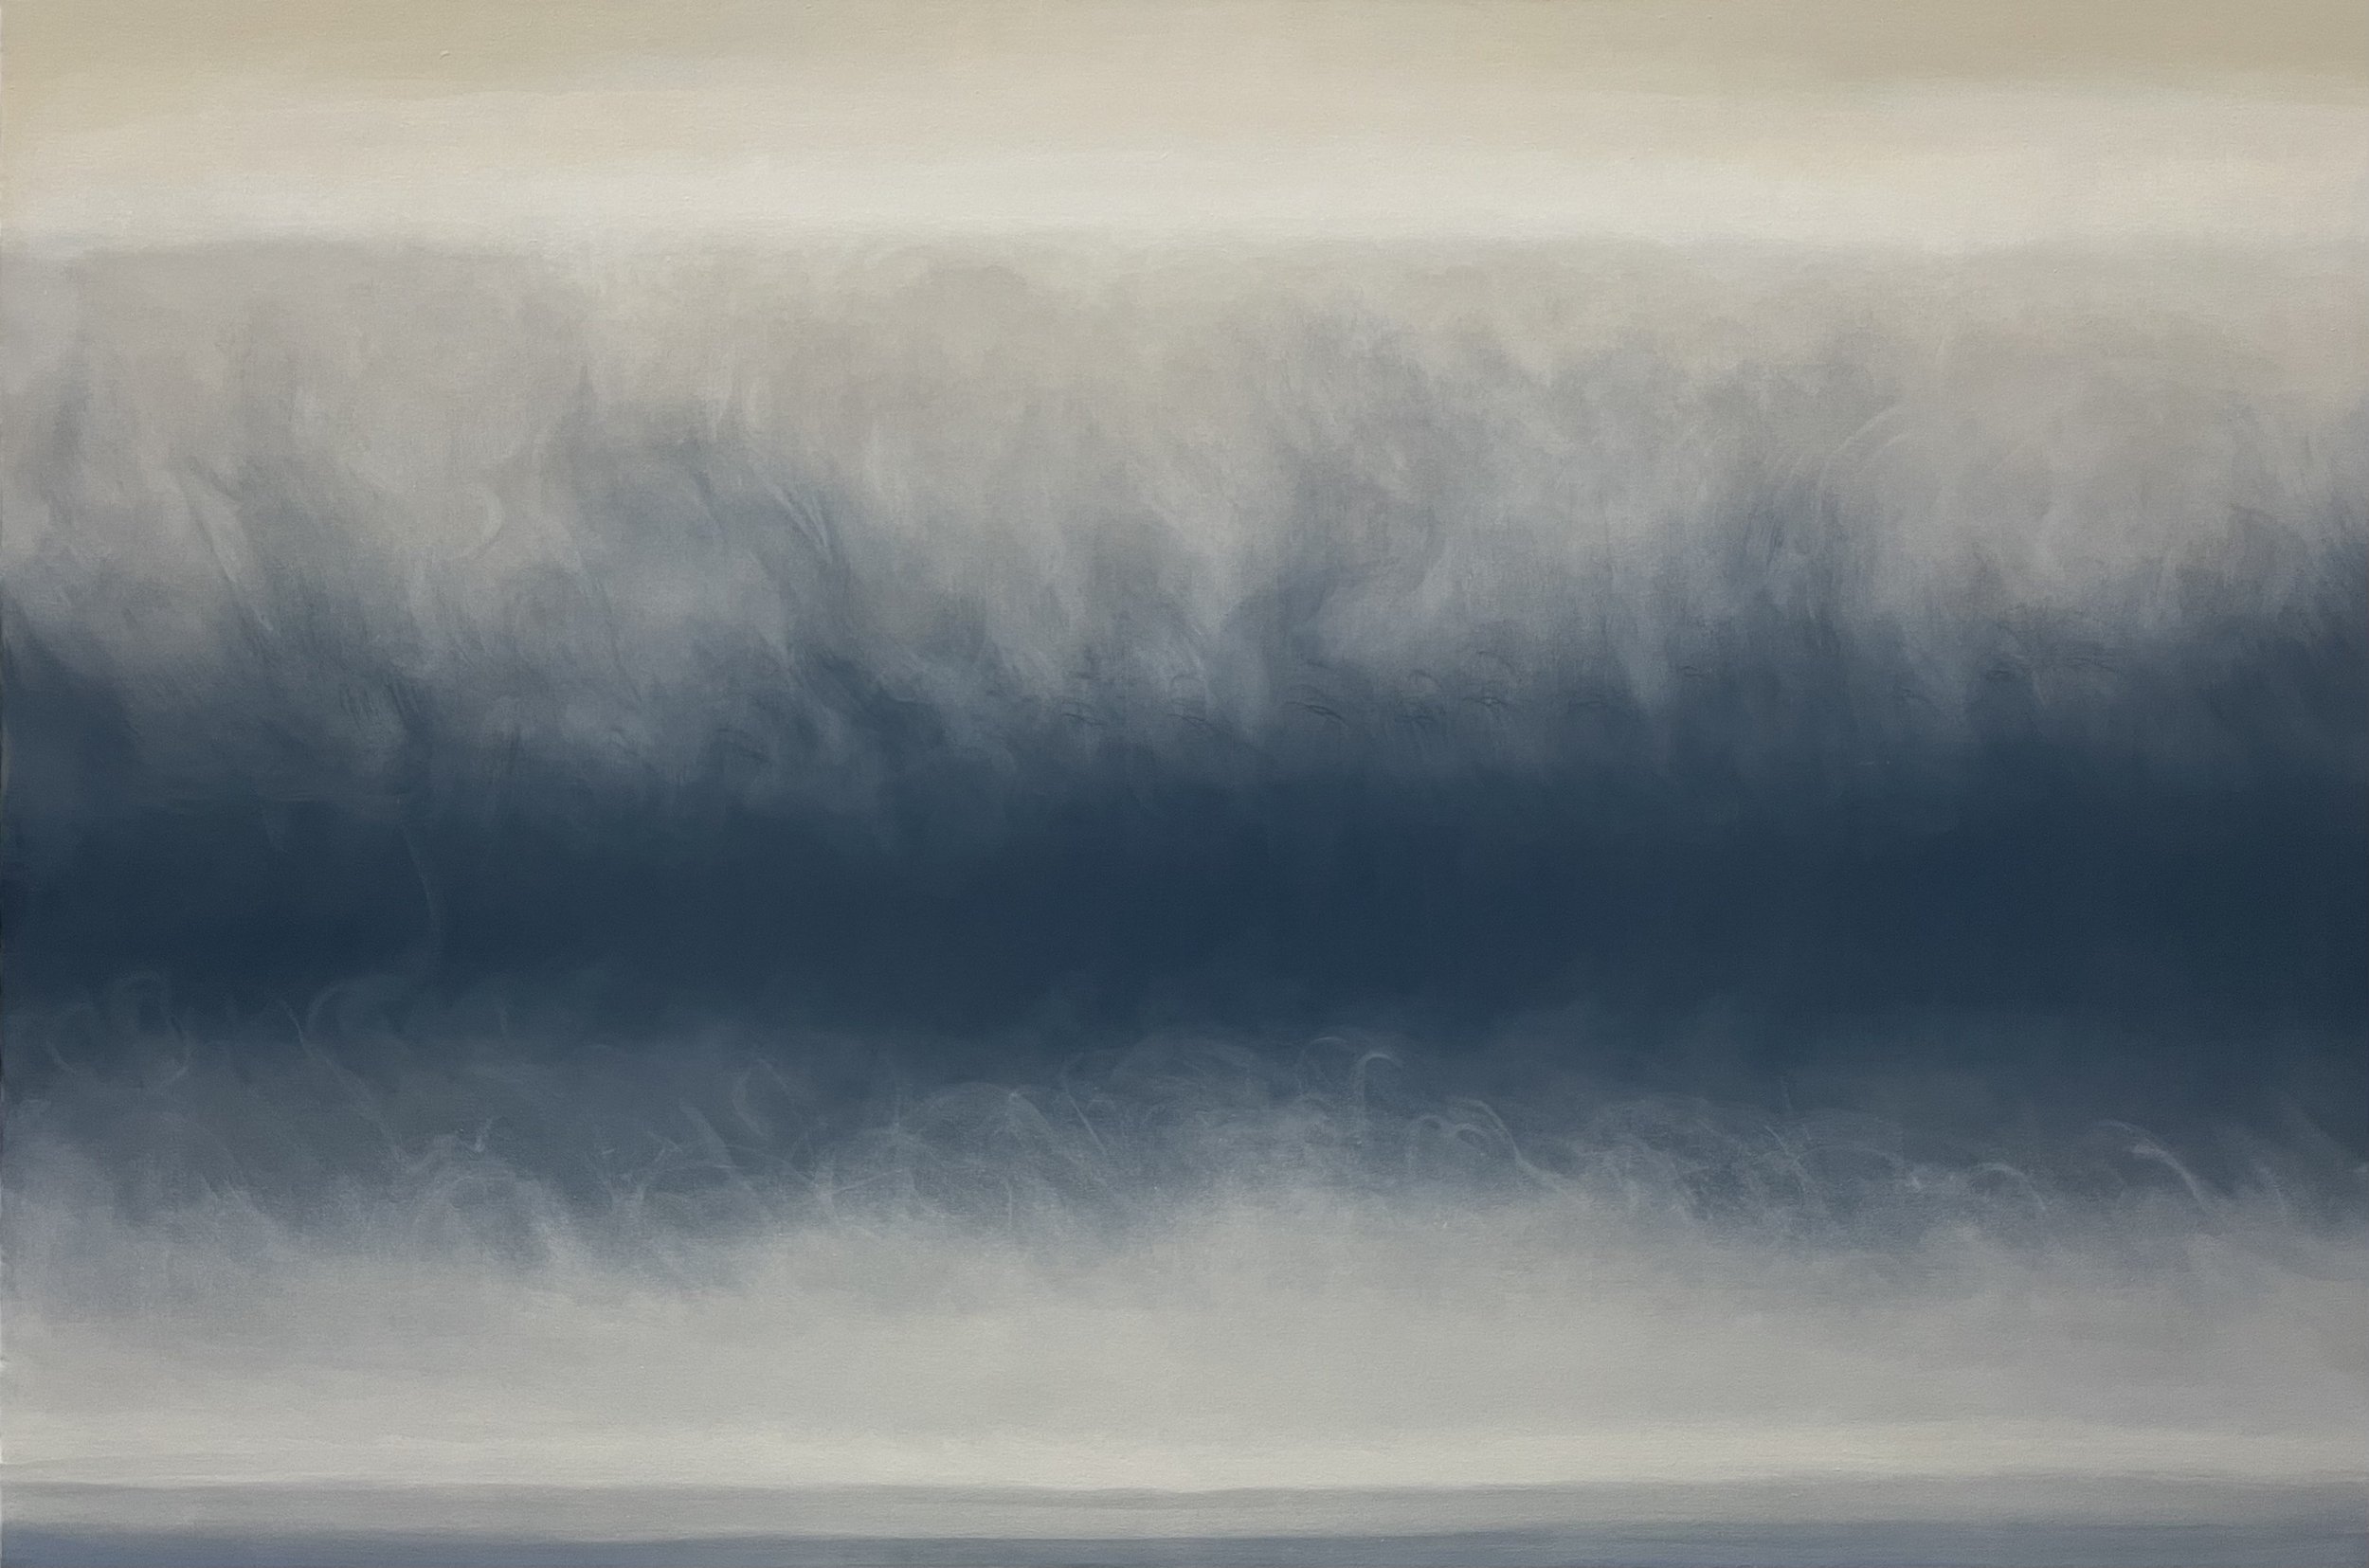 Janet Jennings, Cloud Break, Oil on canvas, 40 x 60 inches, $8000